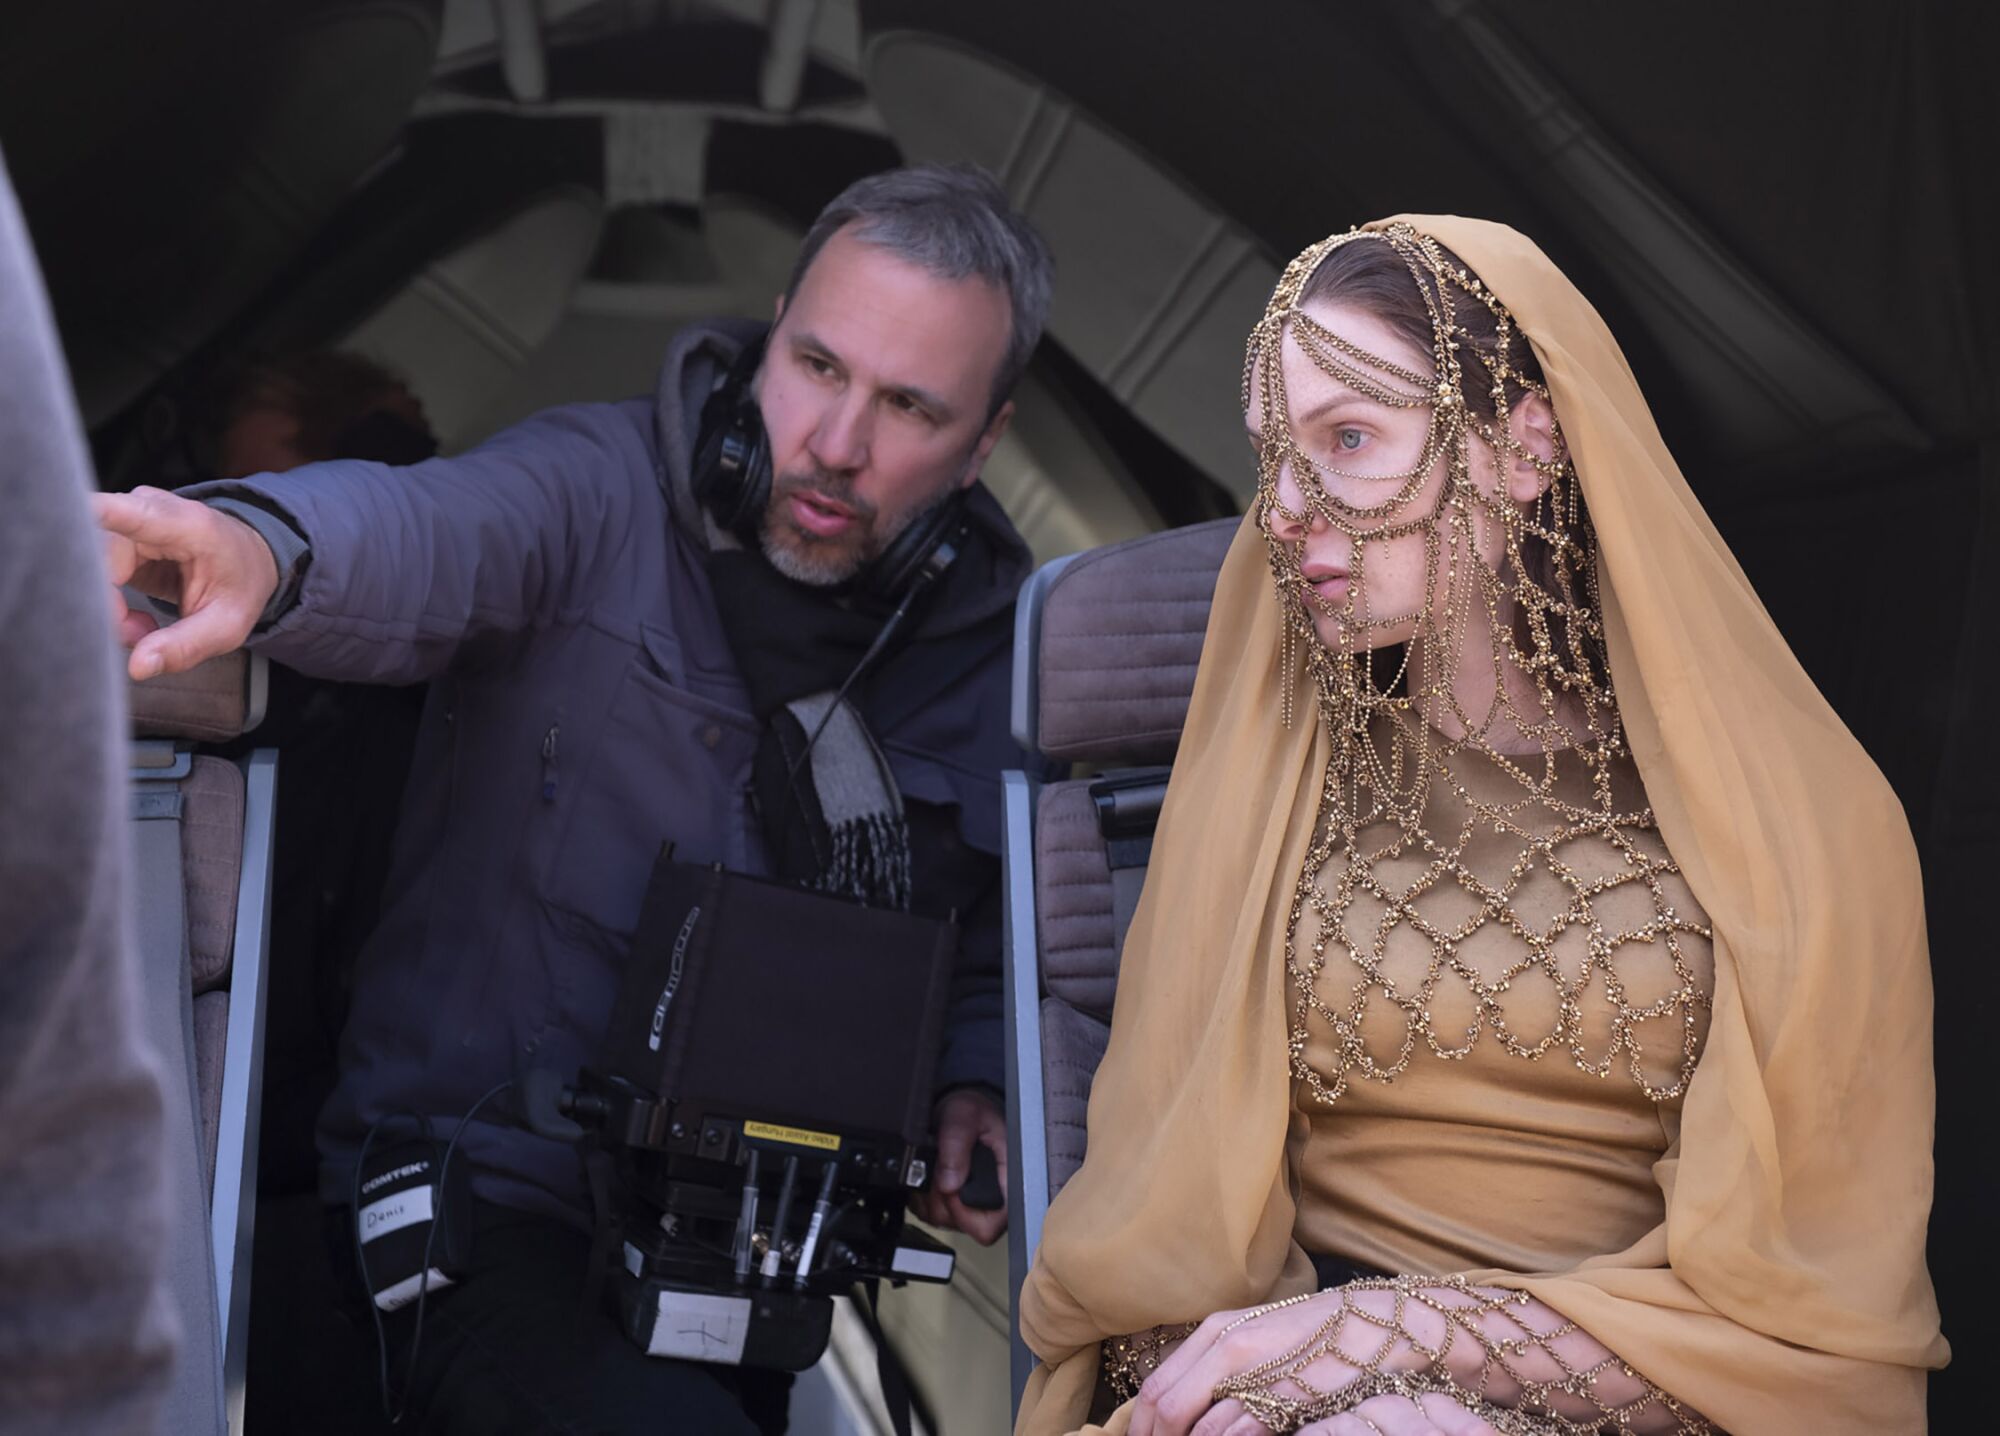 Director Denis Villeneuve on the set of "Dune" with Rebecca Ferguson, who plays Lady Jessica.